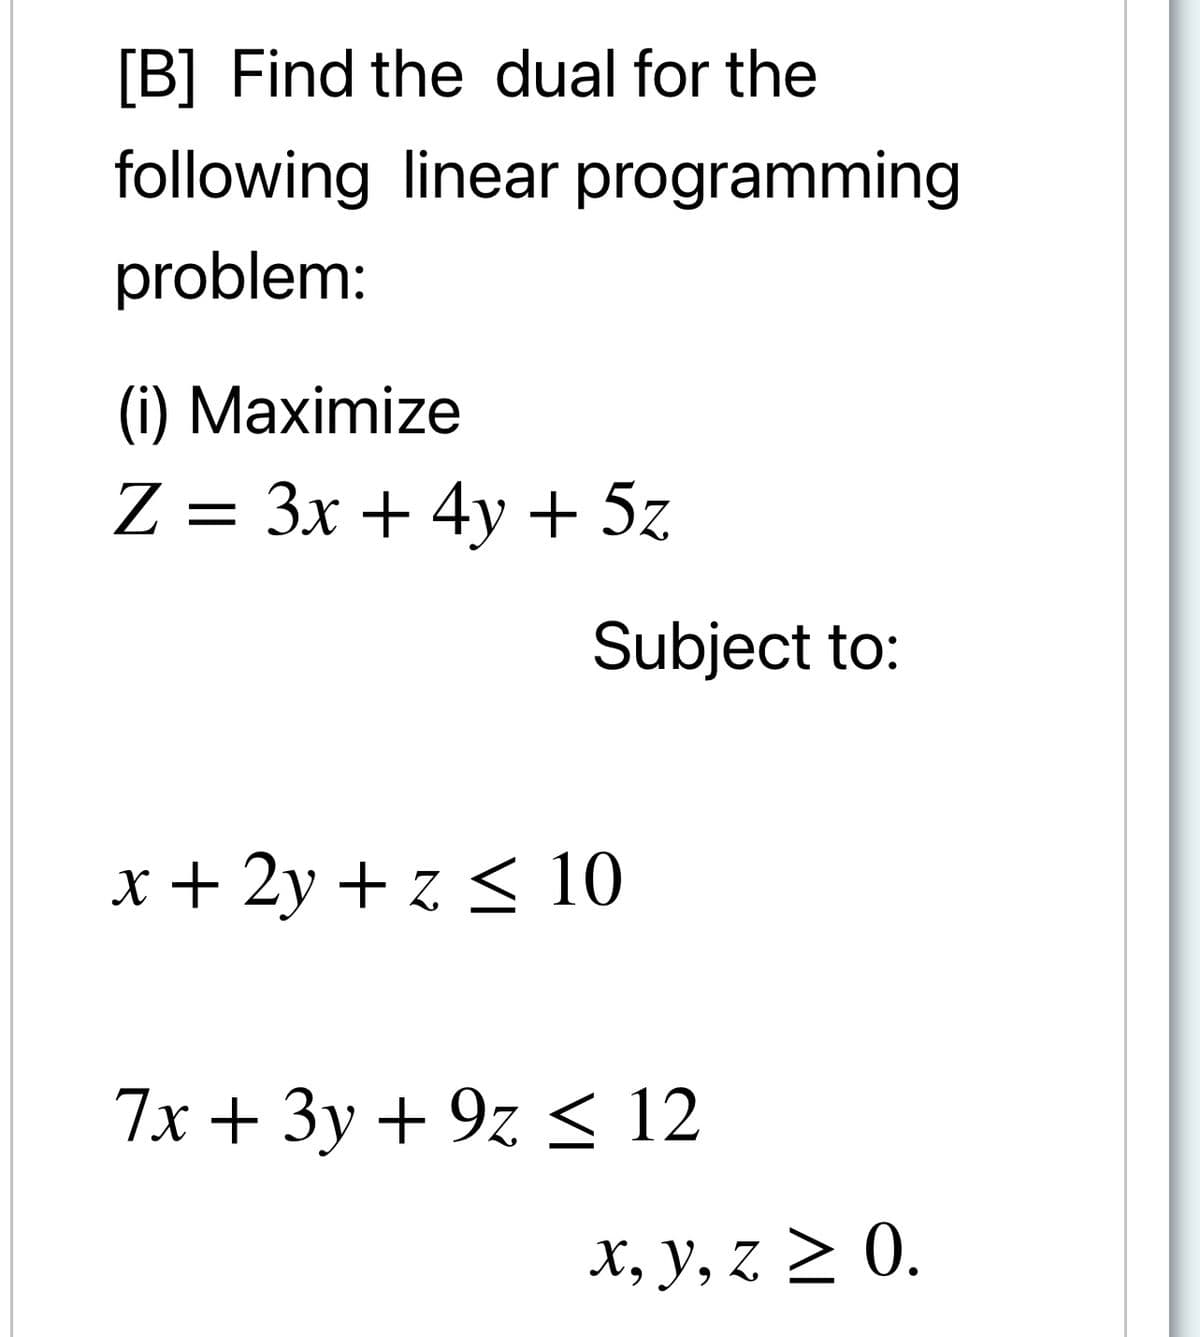 [B] Find the dual for the
following linear programming
problem:
(i) Maximize
Z = 3x + 4y + 5z
Subject to:
x + 2y + z < 10
7x + 3y + 9z < 12
X, y, z > 0.
